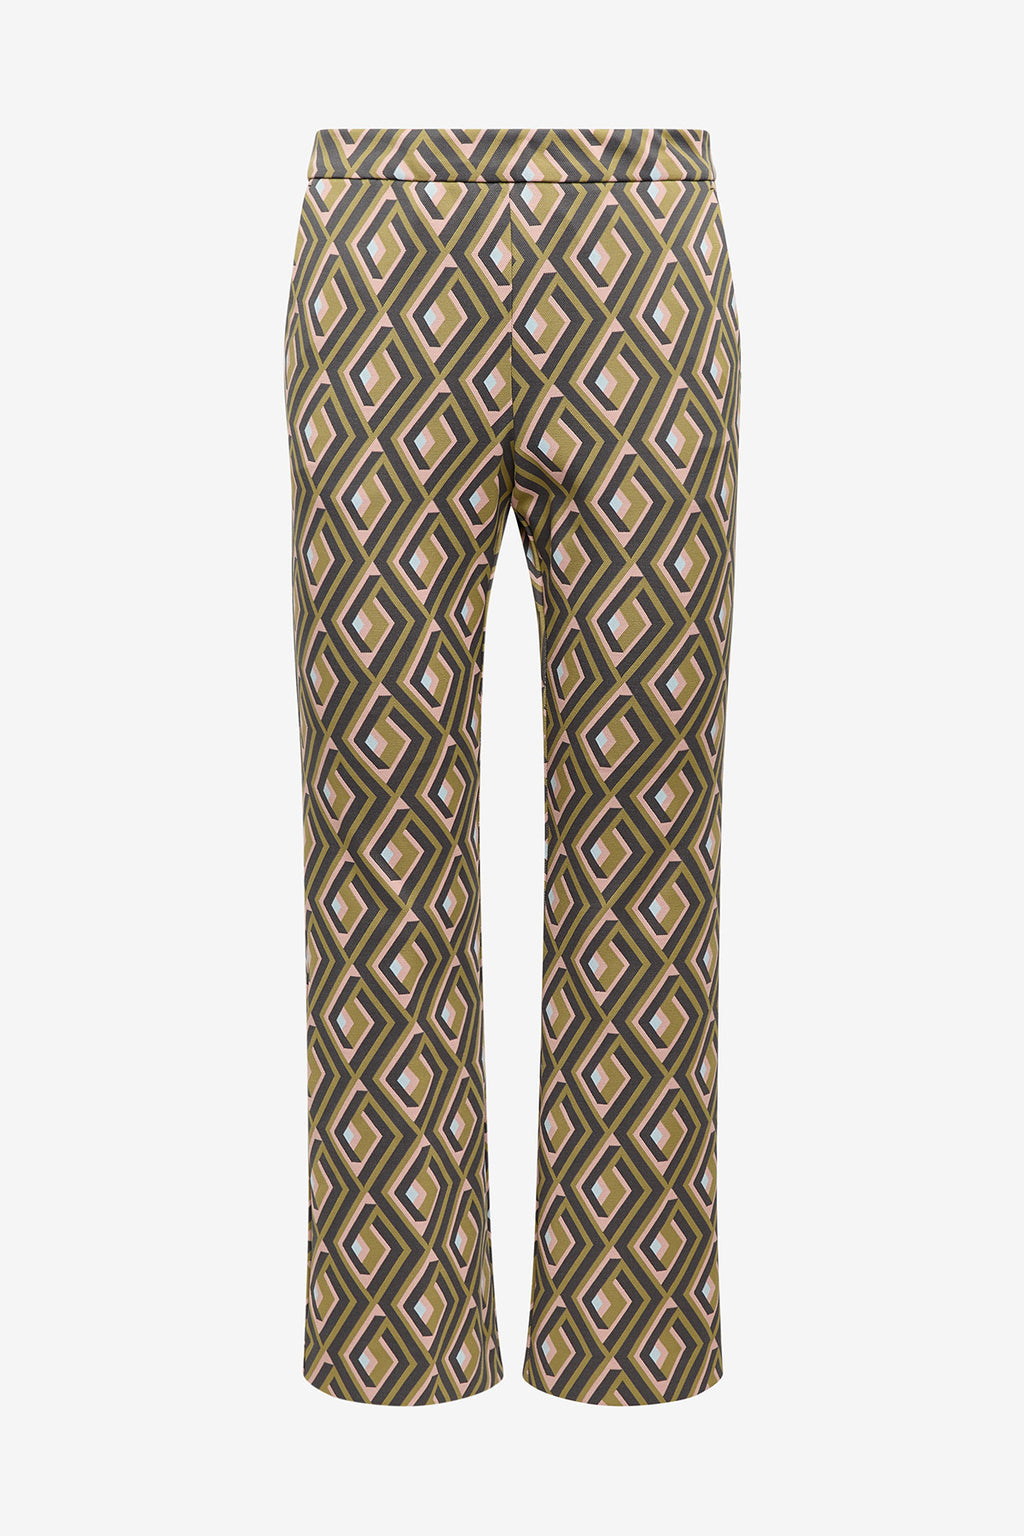 maze jacquard trousers